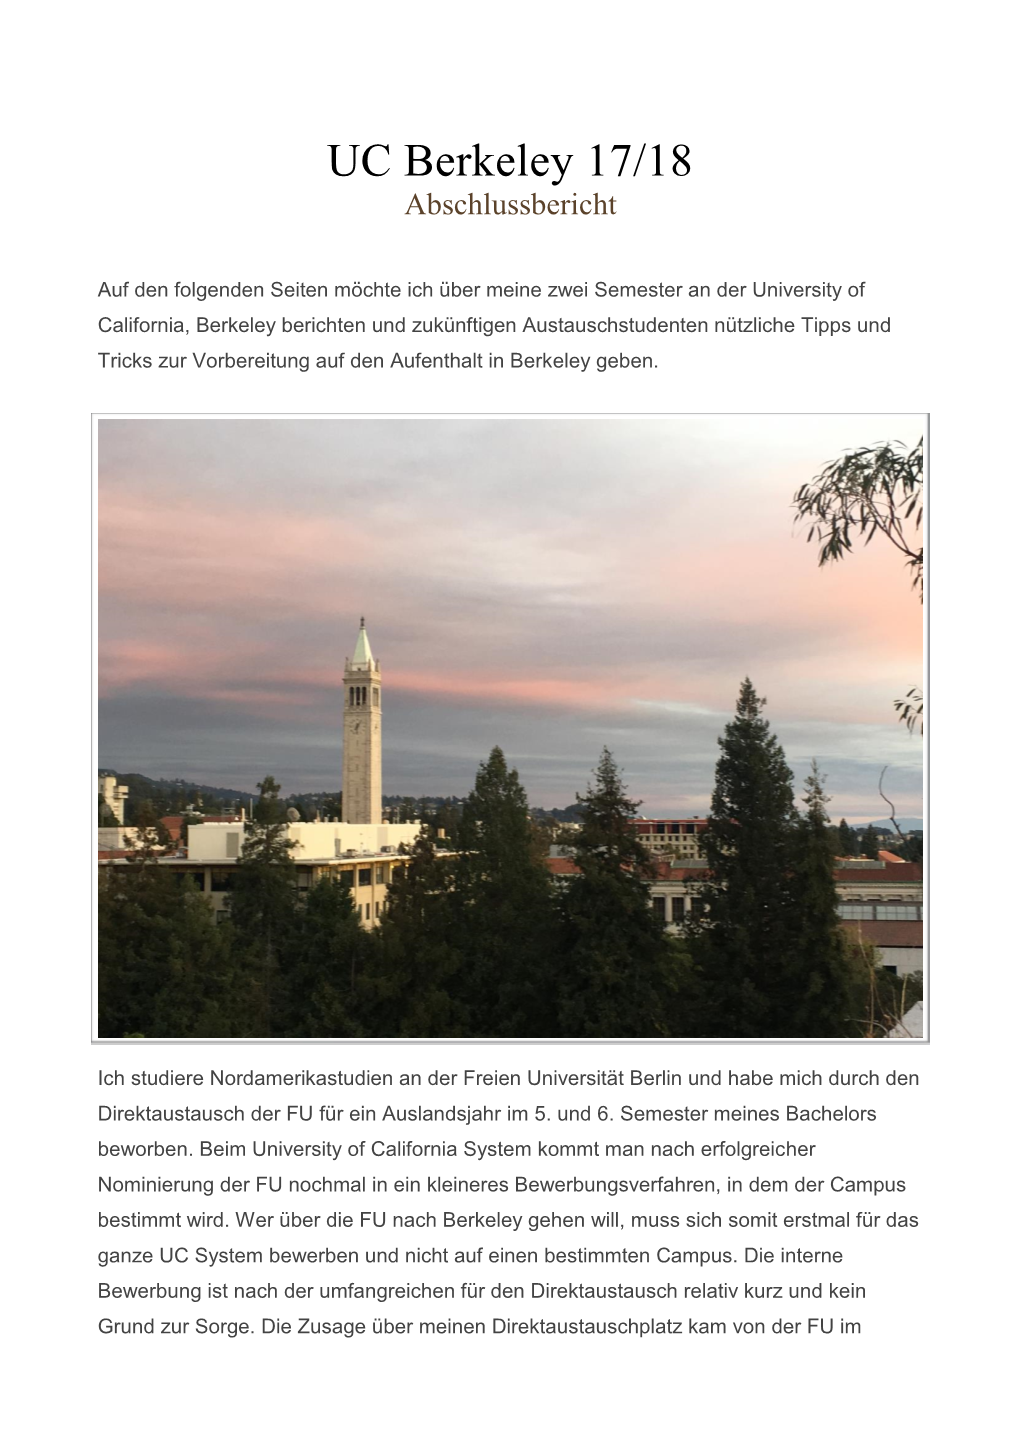 UC Berkeley 17/18 Abschlussbericht